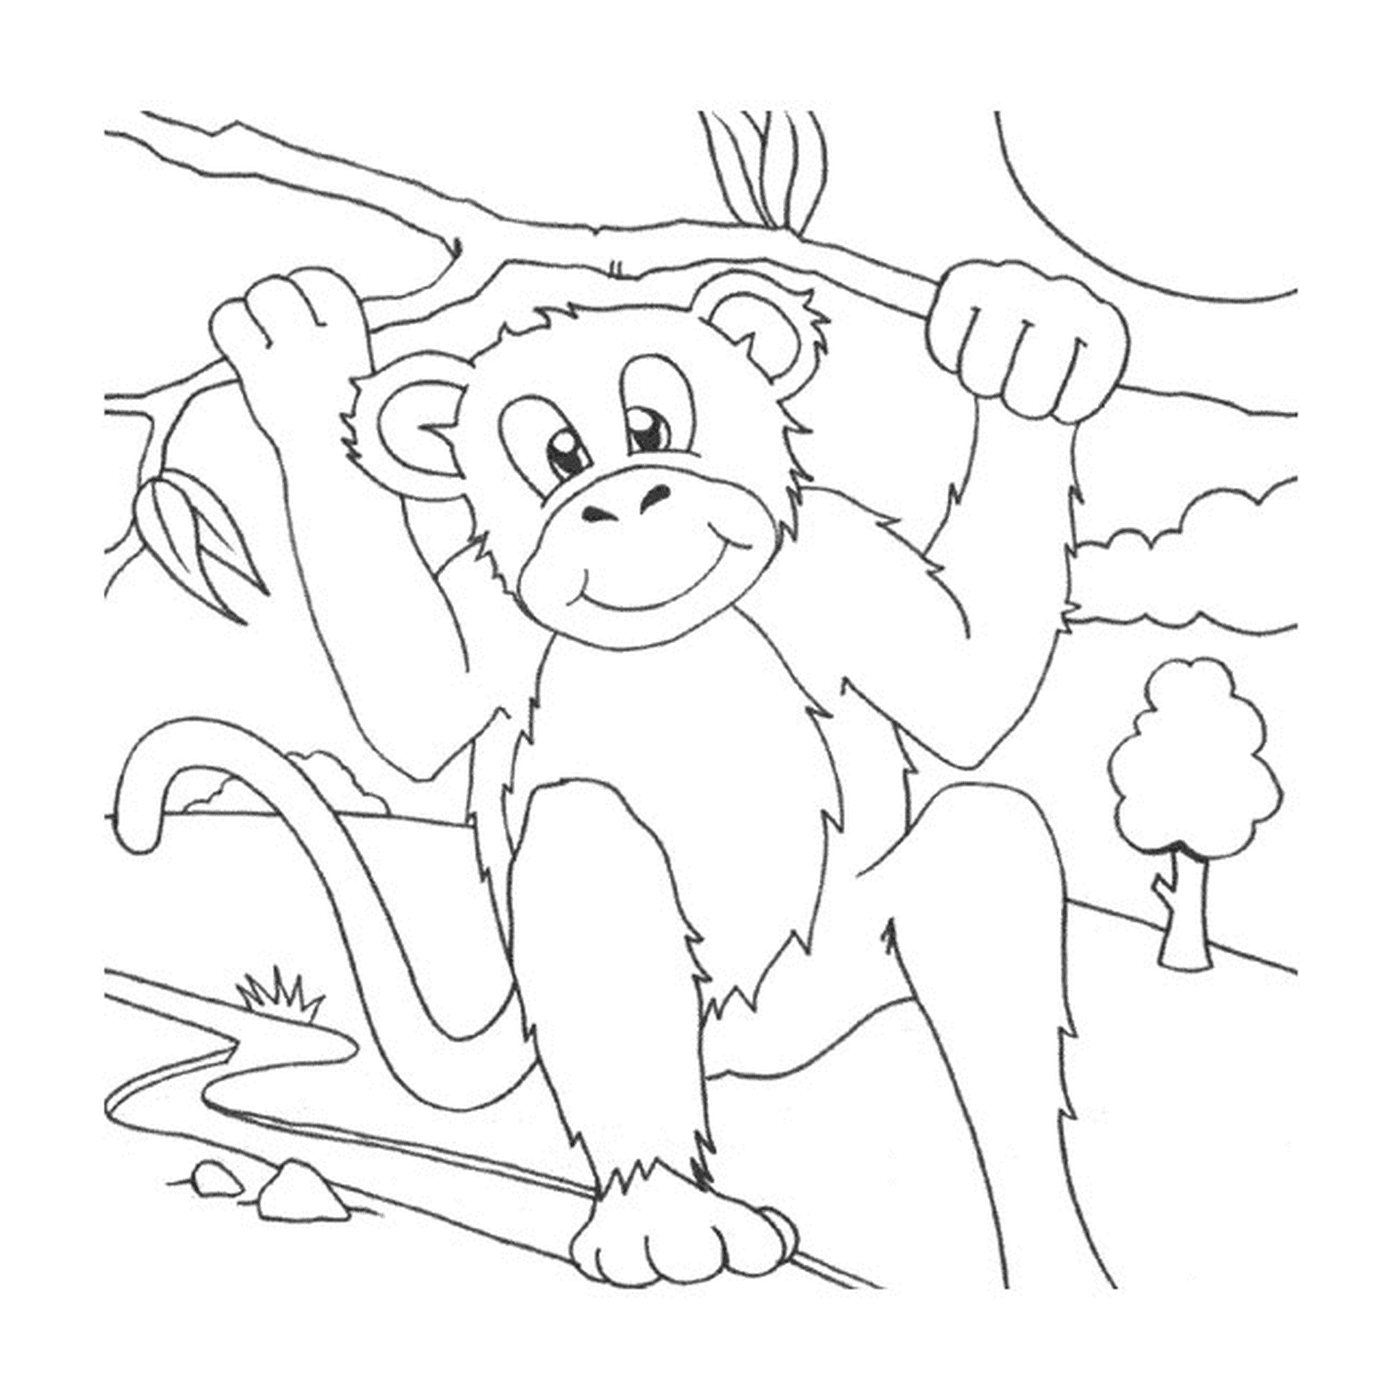  Macaco na floresta 